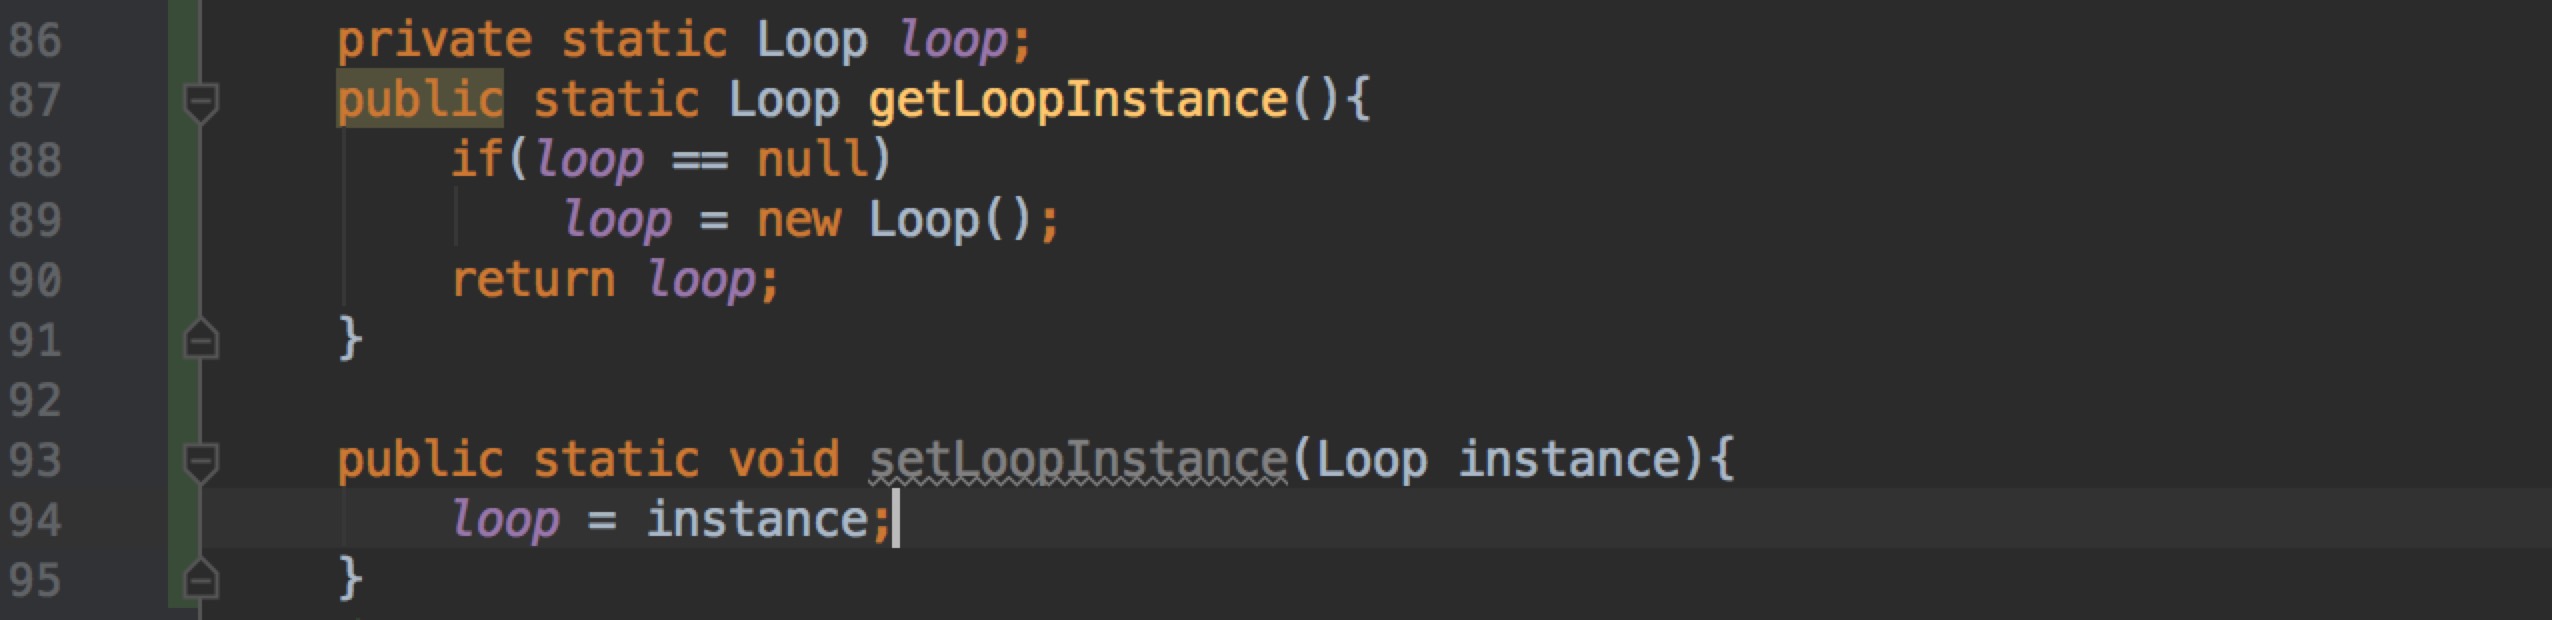 seam_for_infinite_loop.jpg